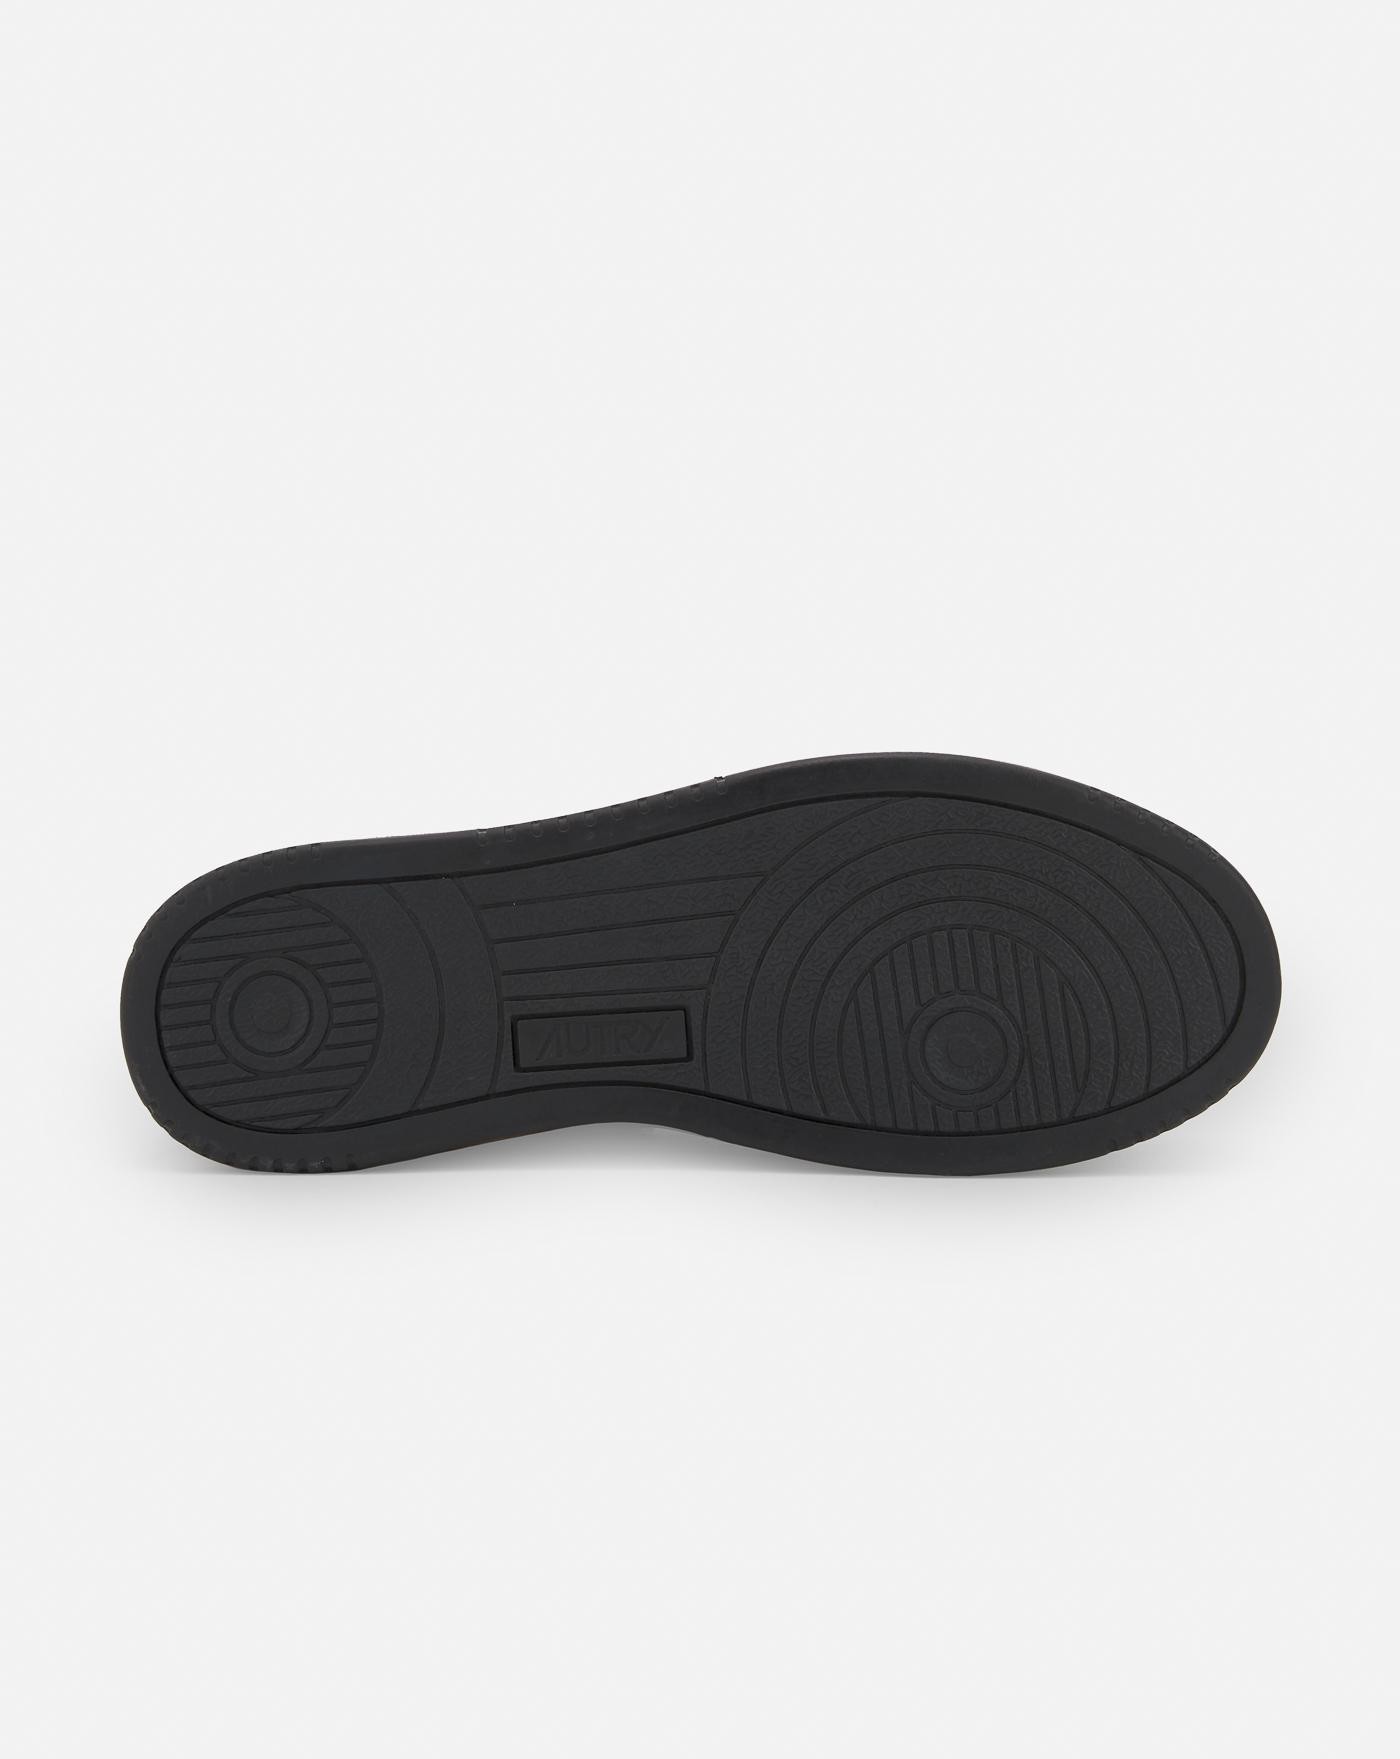 autry-zapatillas-avlm-ms10-sneakers-black-negras-4